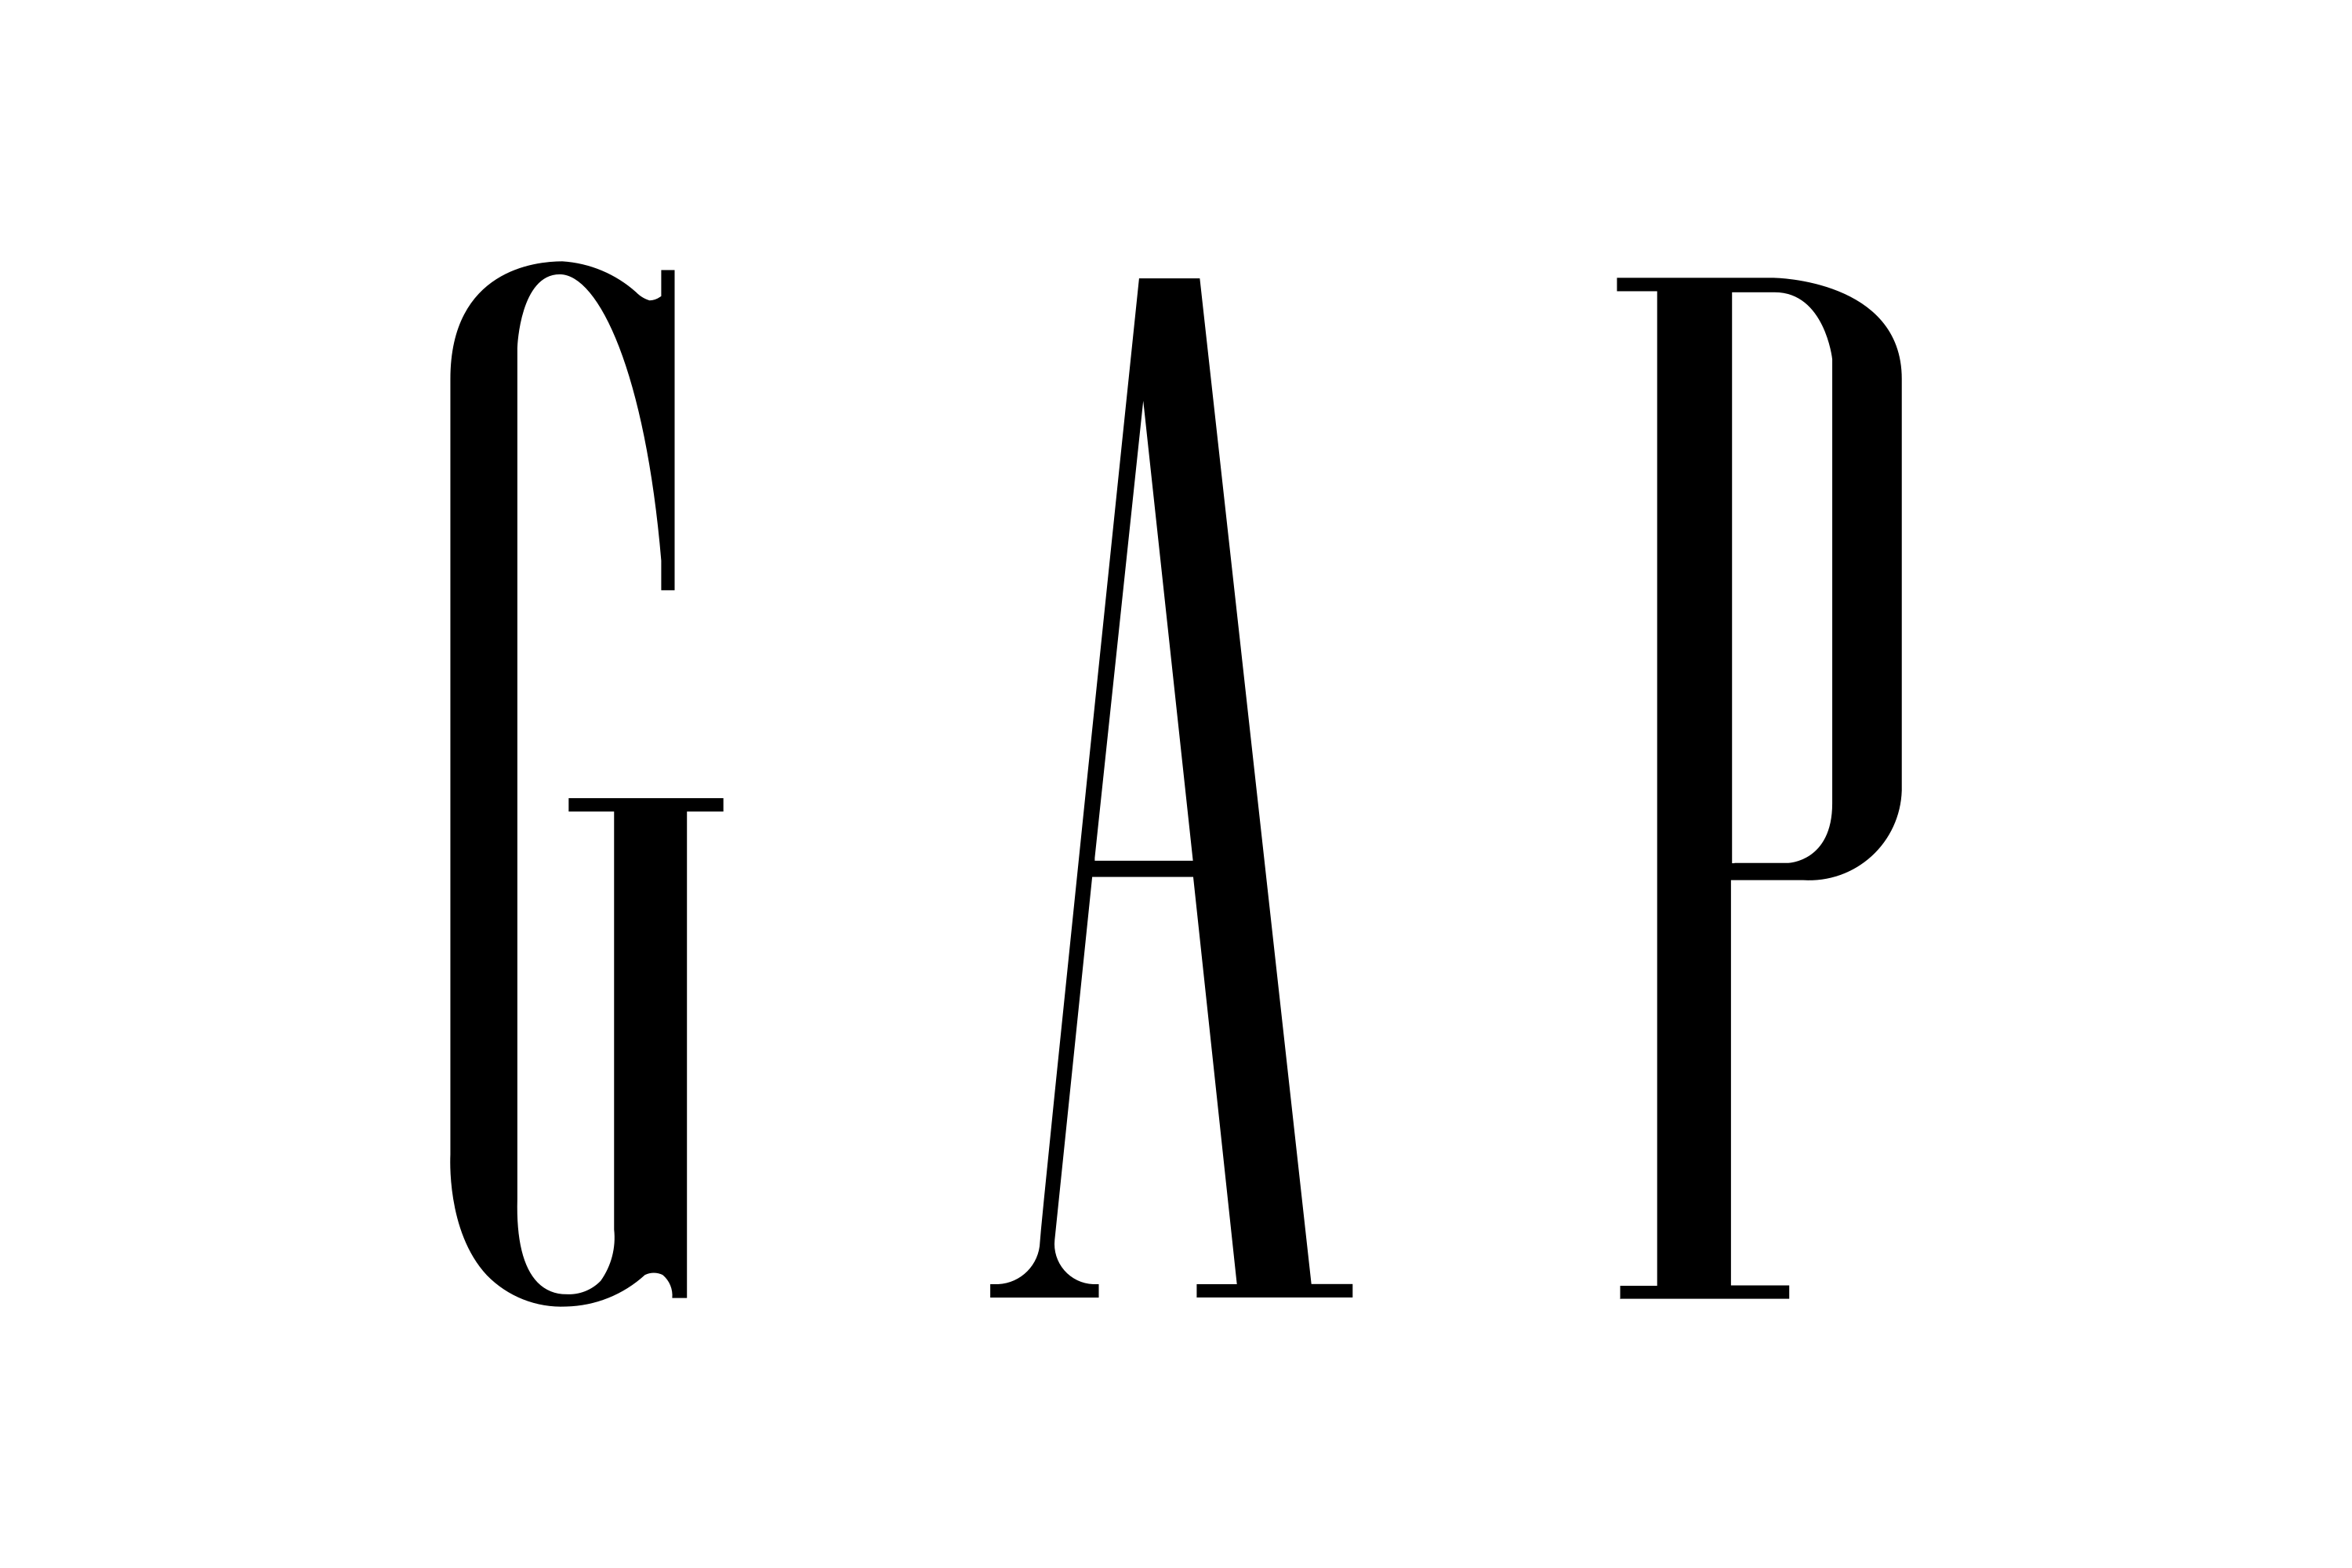 Download Gap, Inc. Logo in SVG Vector or PNG File Format 